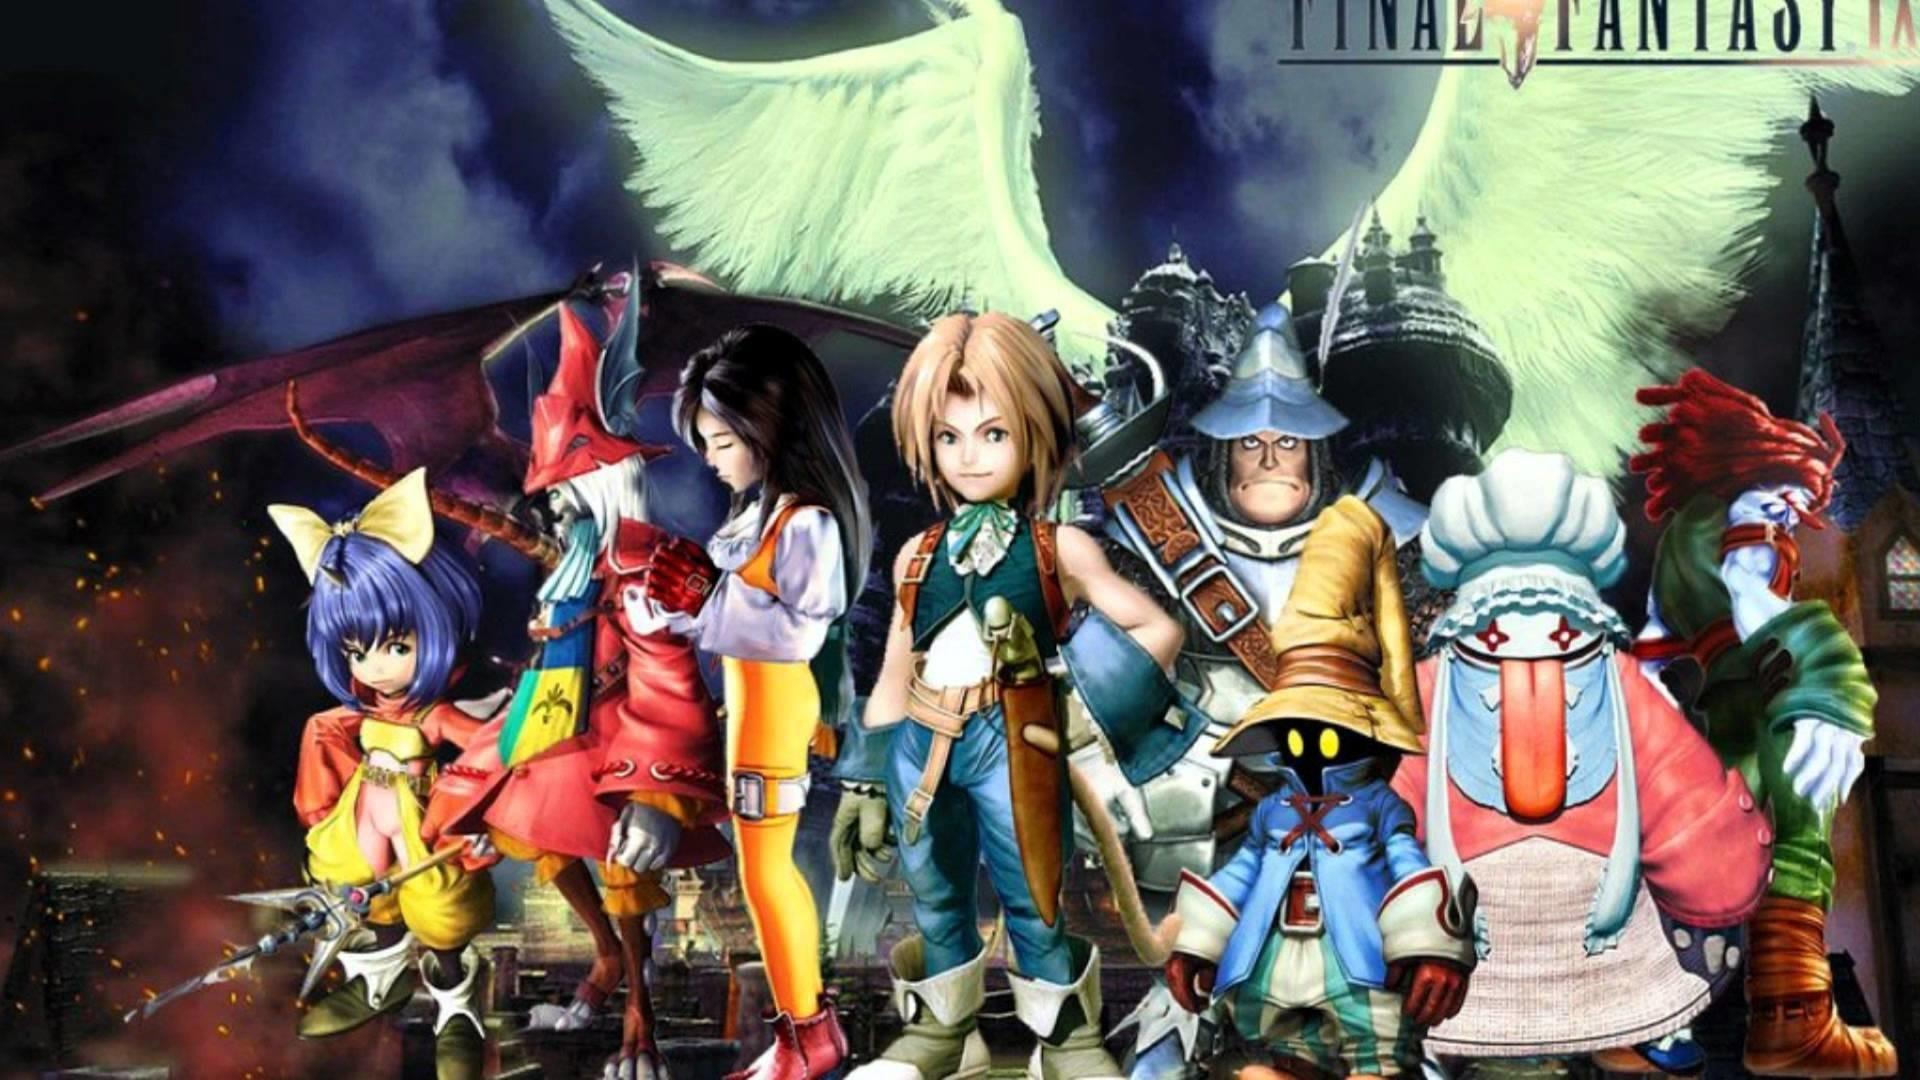 Final Fantasy Ix Wallpaper background picture